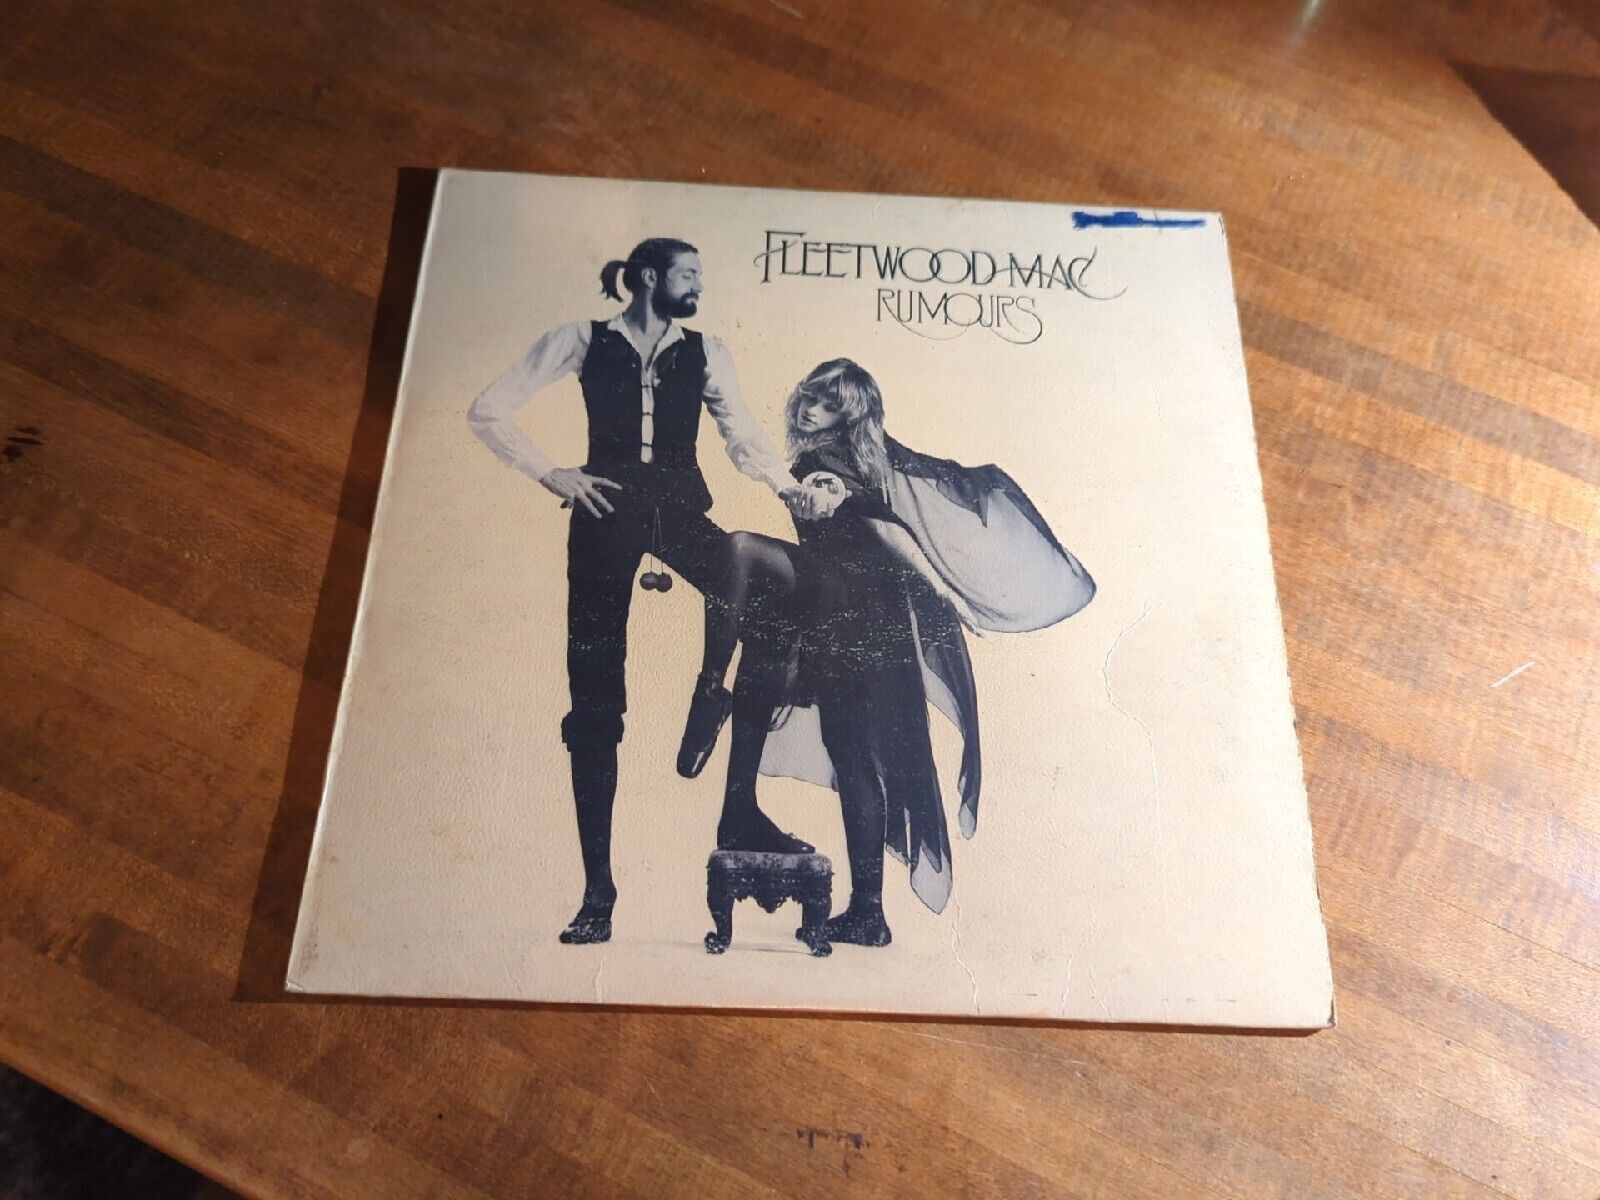 Fleetwood Mac – Rumours Original Candian pressing Vinyl Record BSK 3010 1977